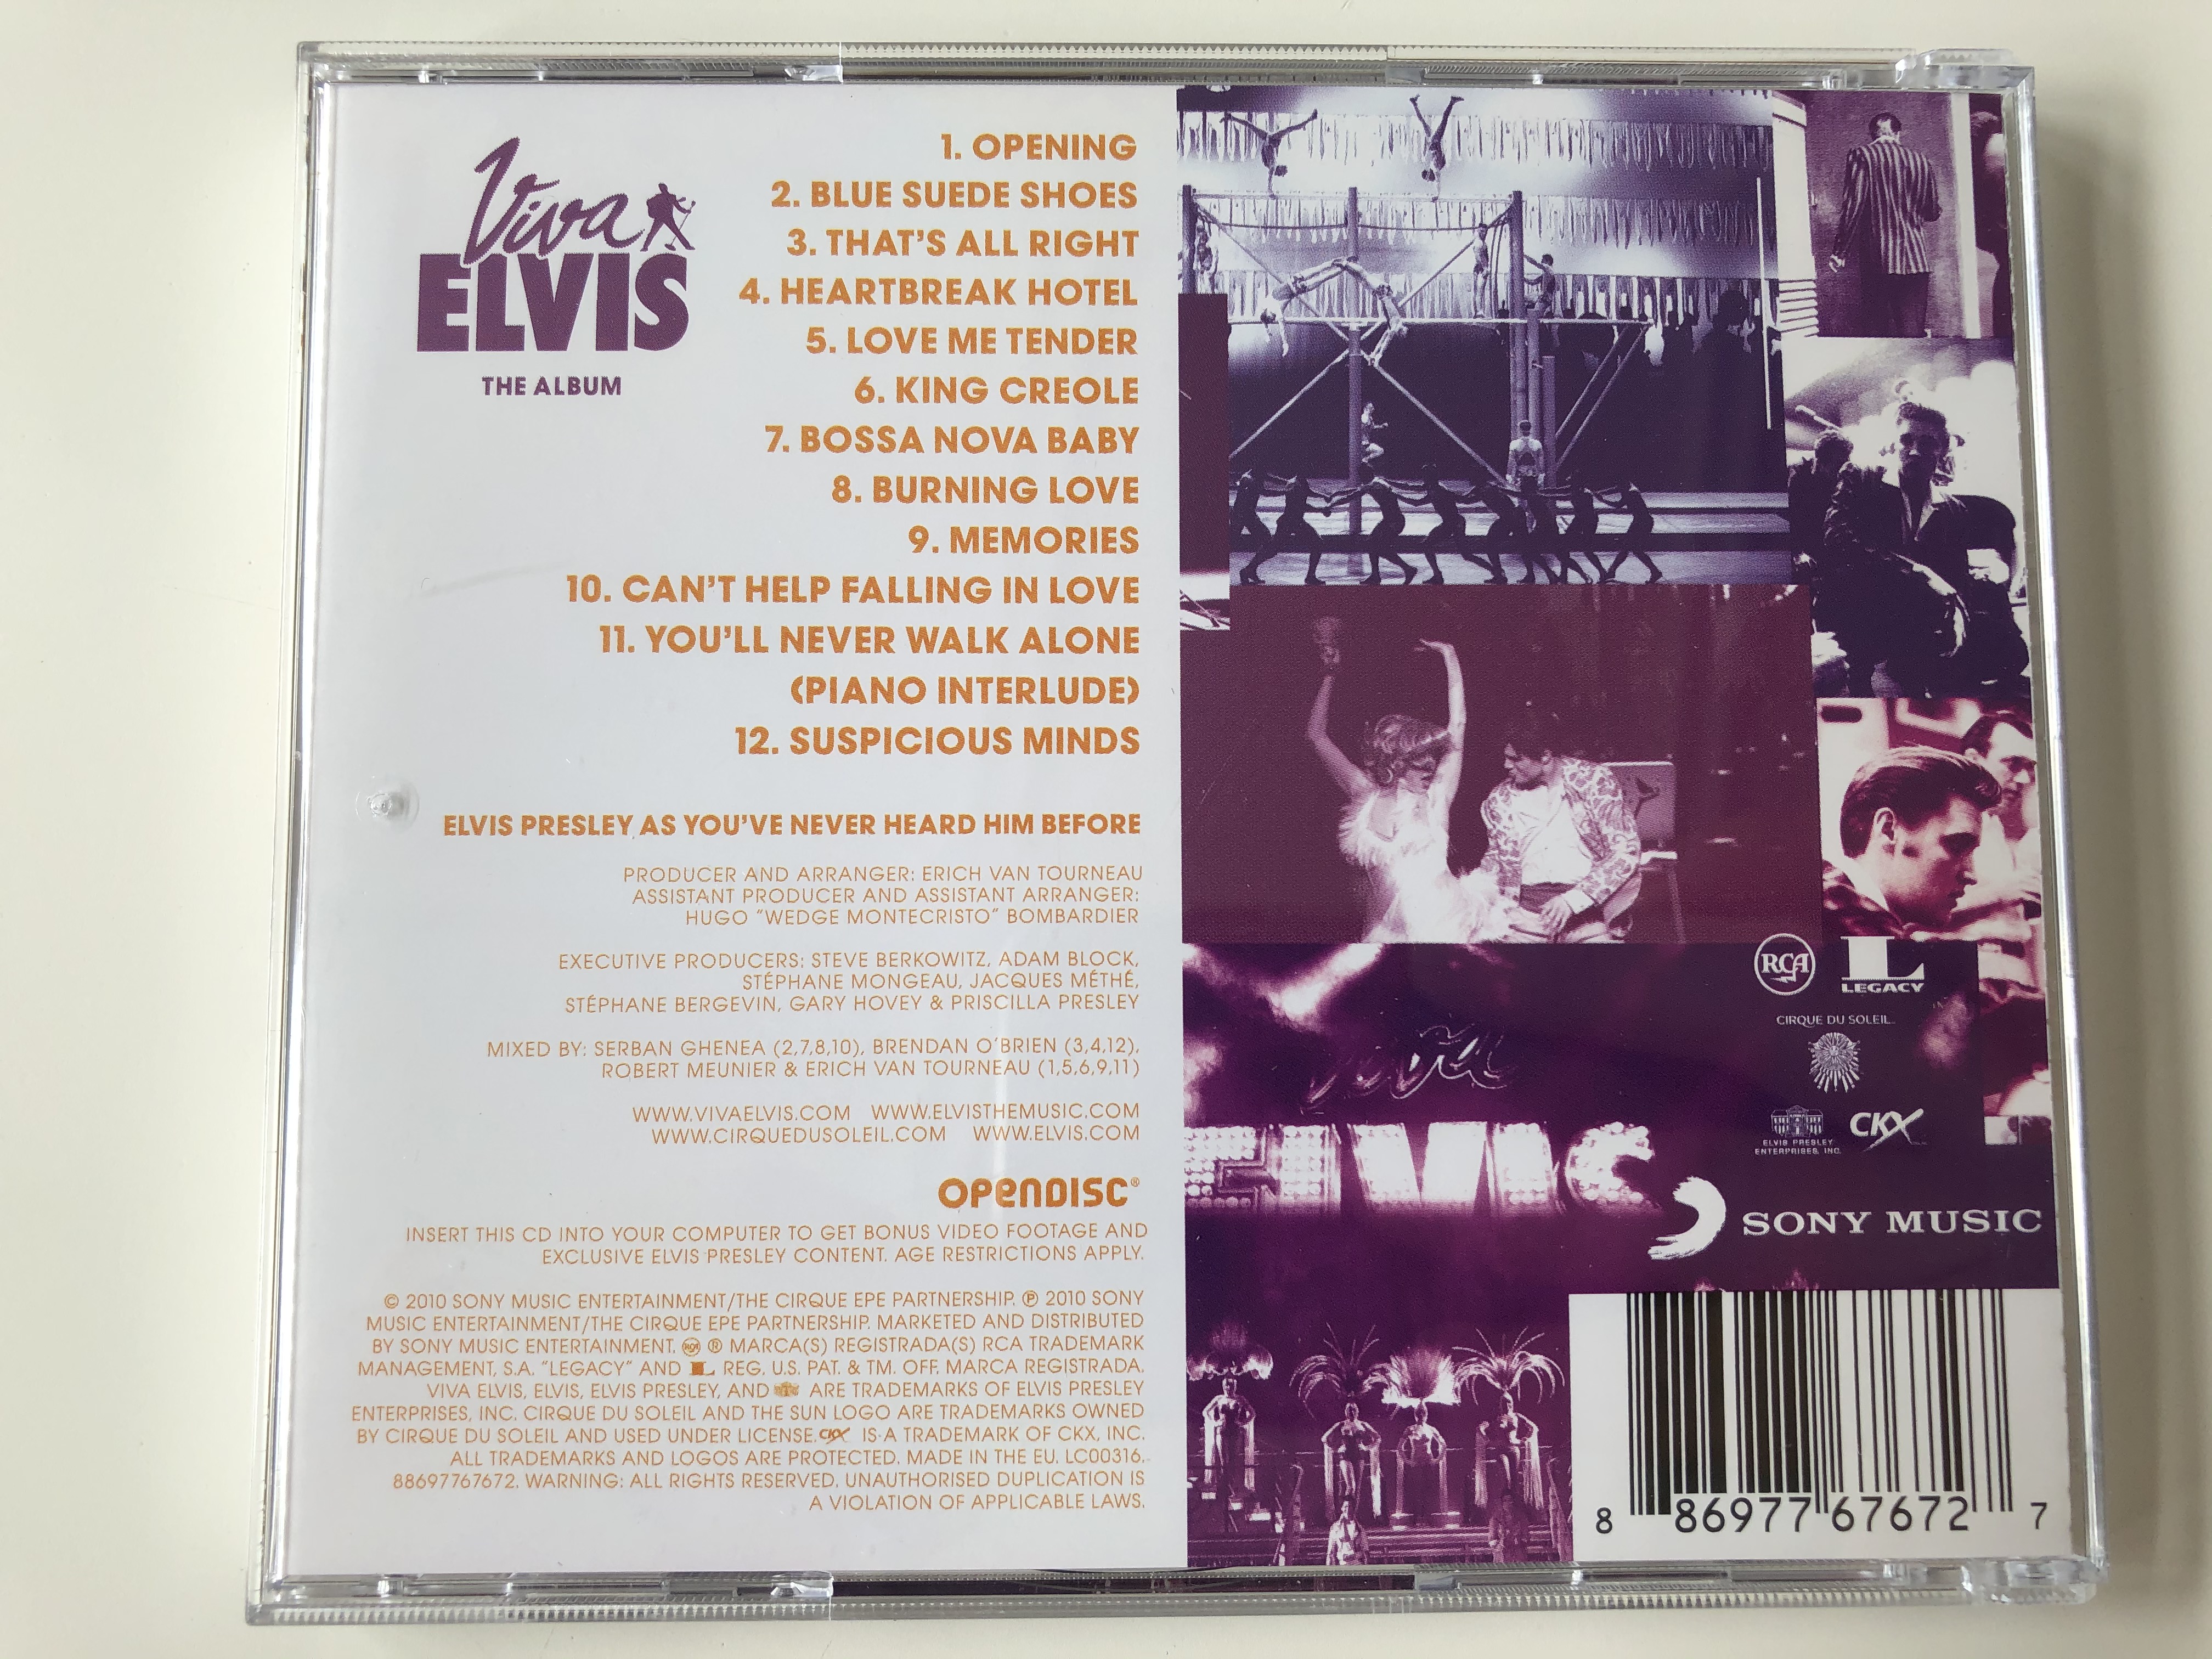 viva-elvis-the-album-rca-audio-cd-2010-88697767672-7-.jpg